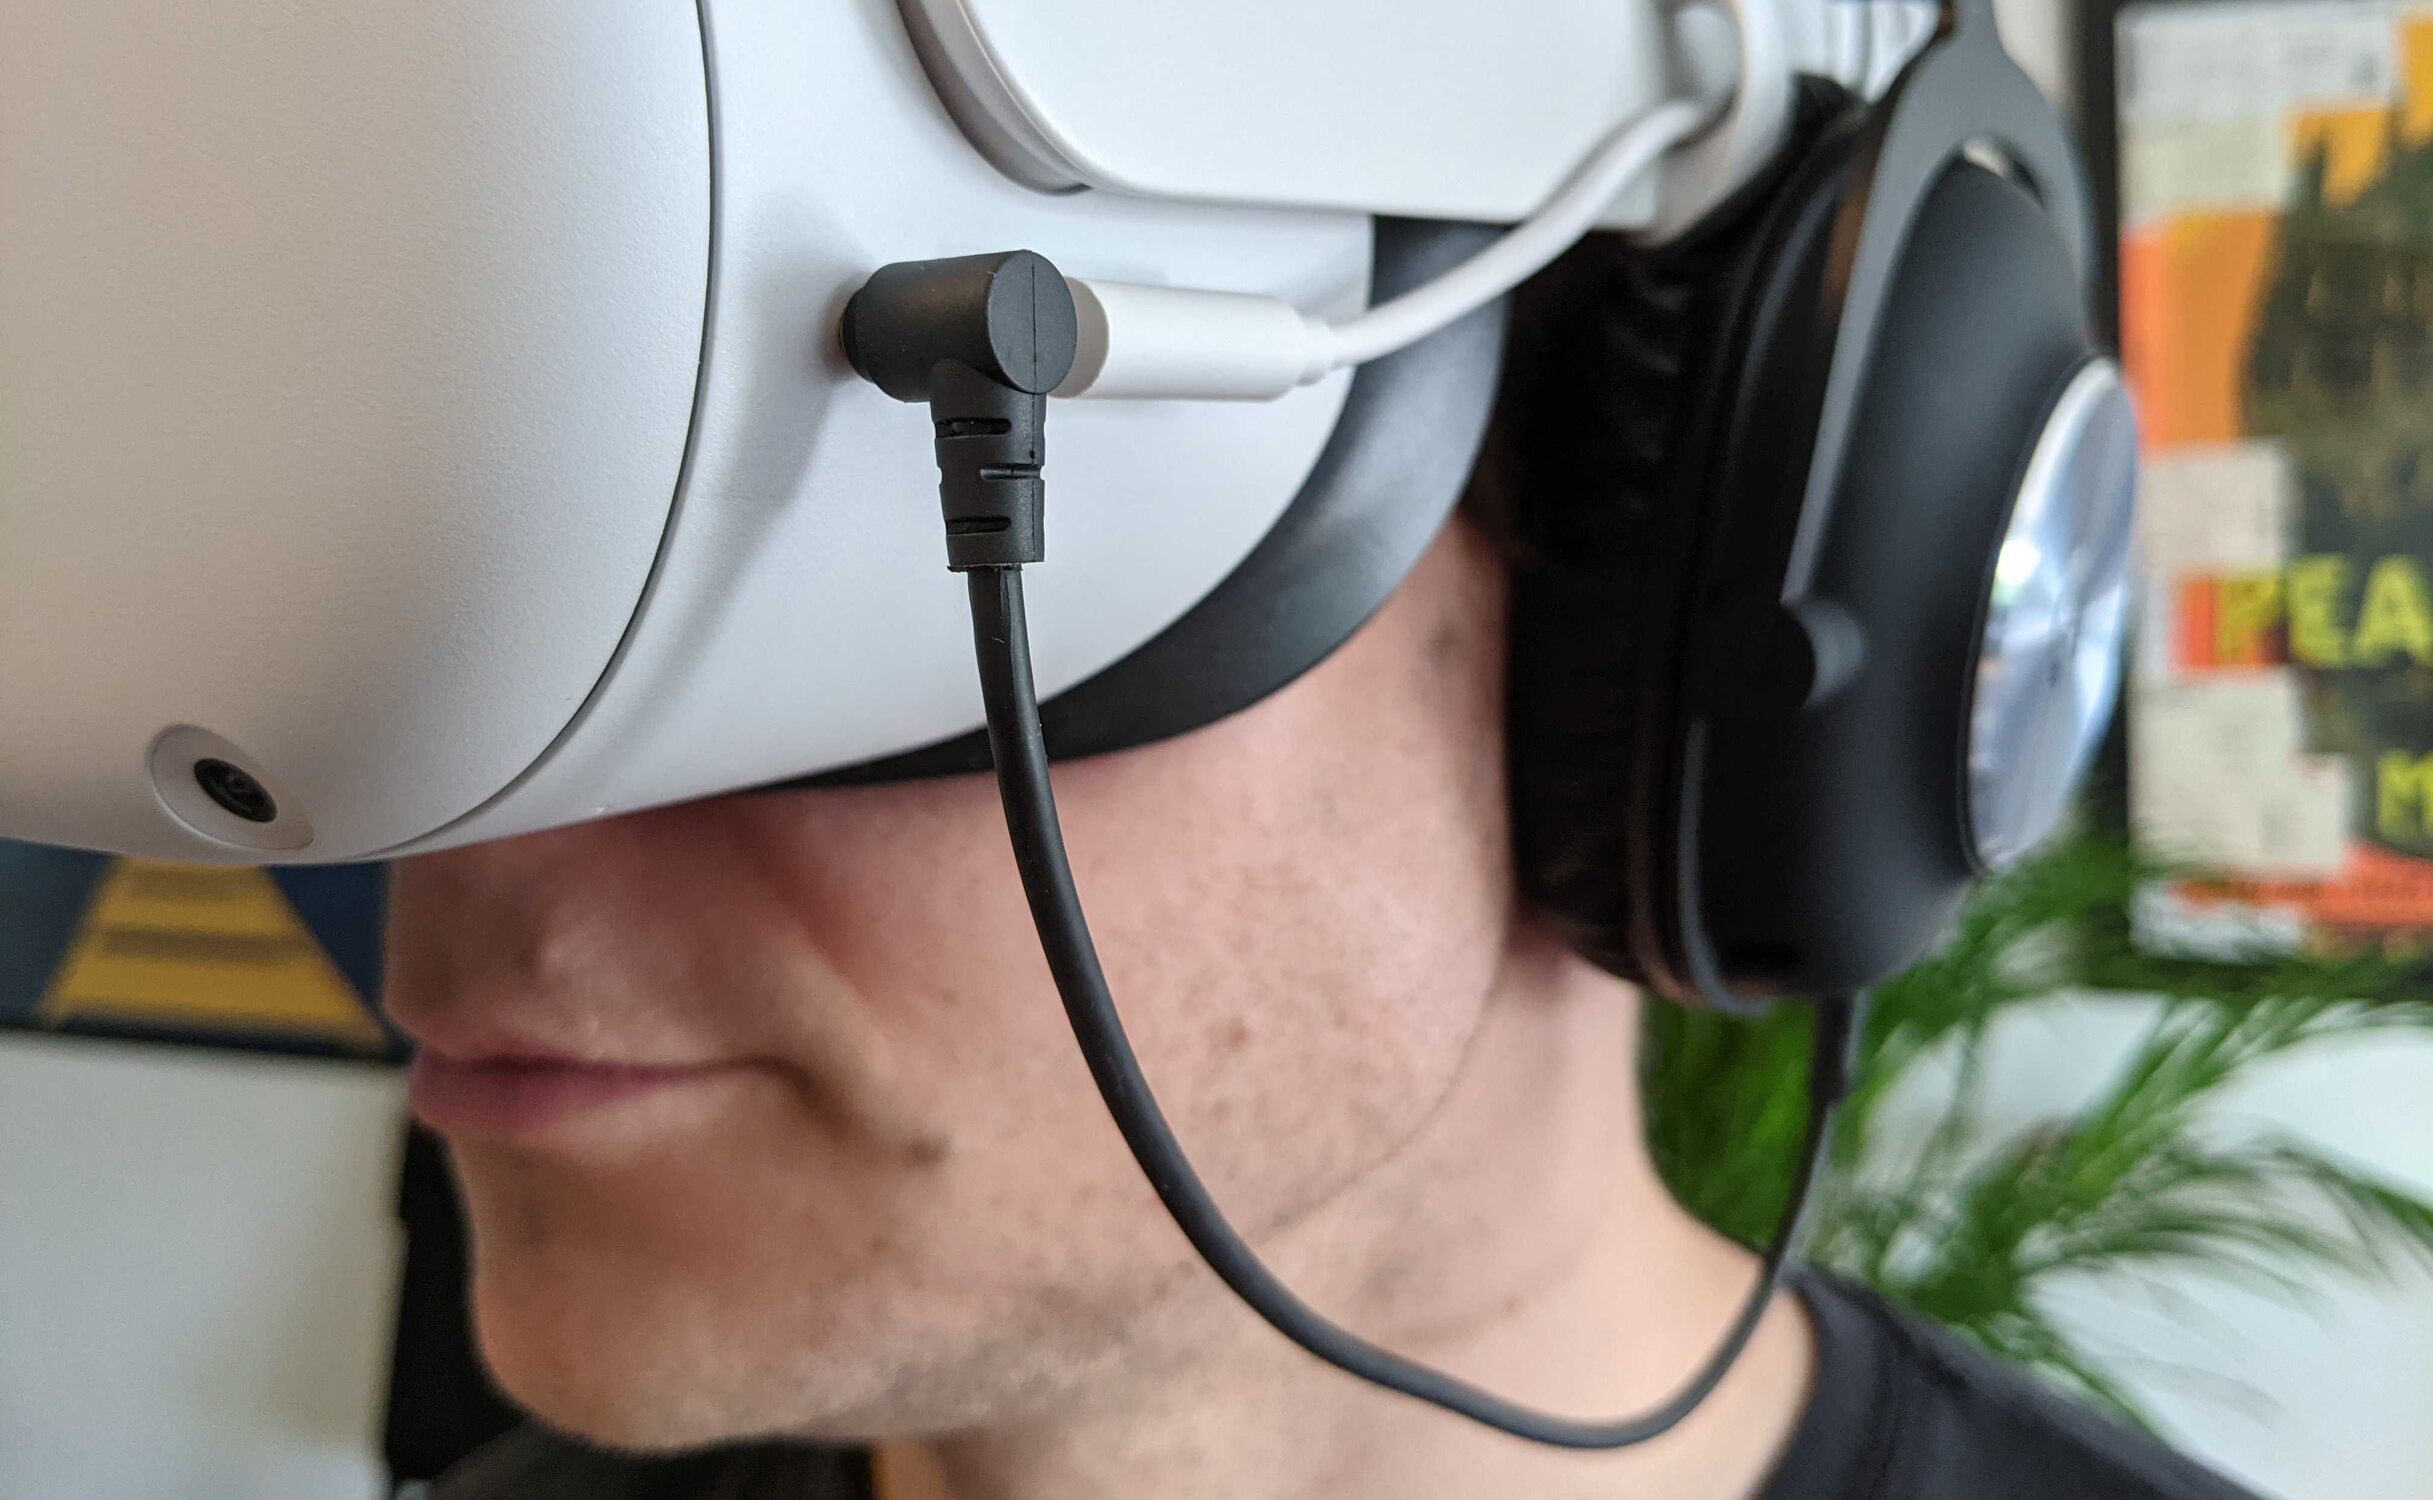 Where Do I Buy Oculus Gaming Headset?